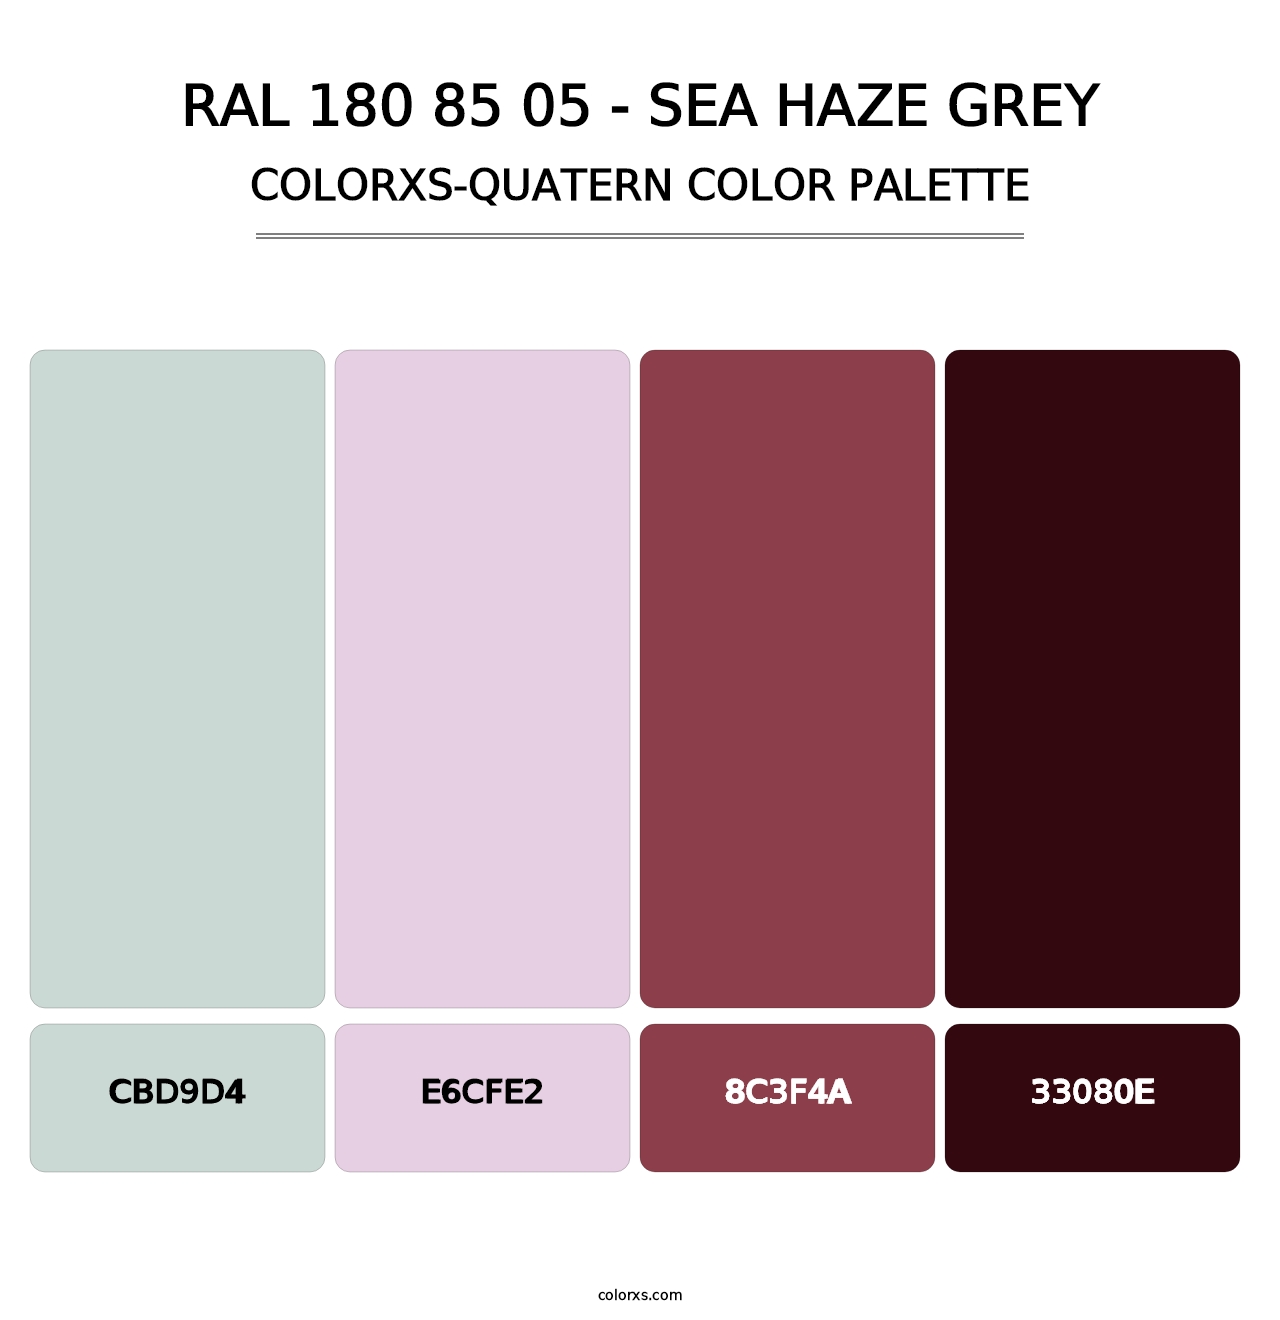 RAL 180 85 05 - Sea Haze Grey - Colorxs Quatern Palette